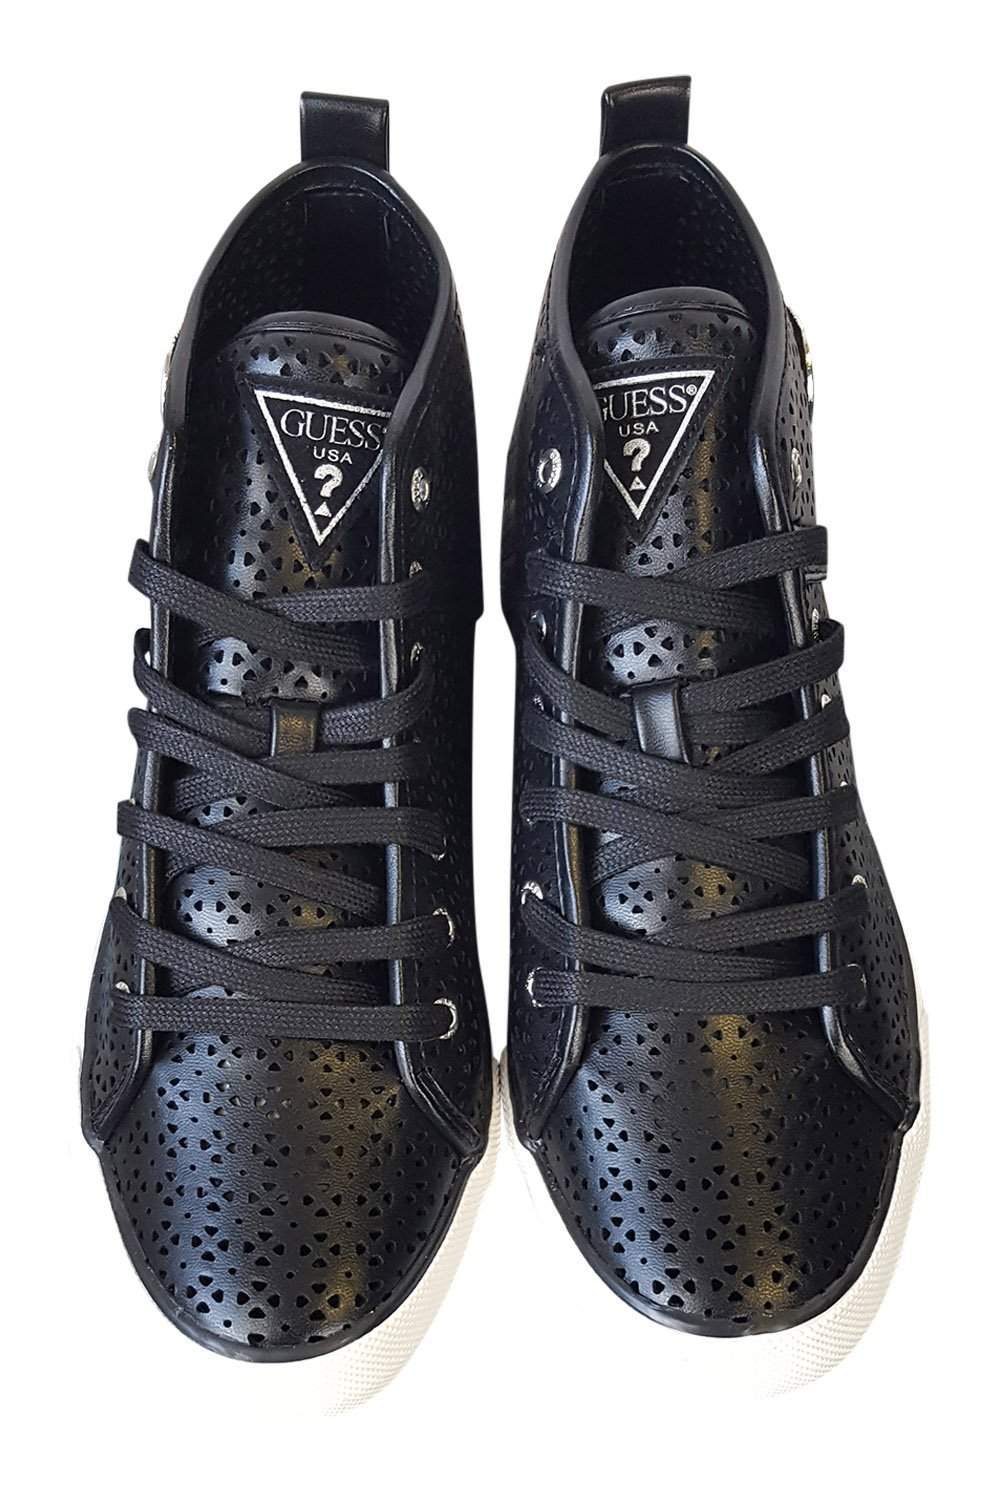 GUESS Glinna Matte Black Laser Cut High Top Sneakers (41)-Guess-The Freperie